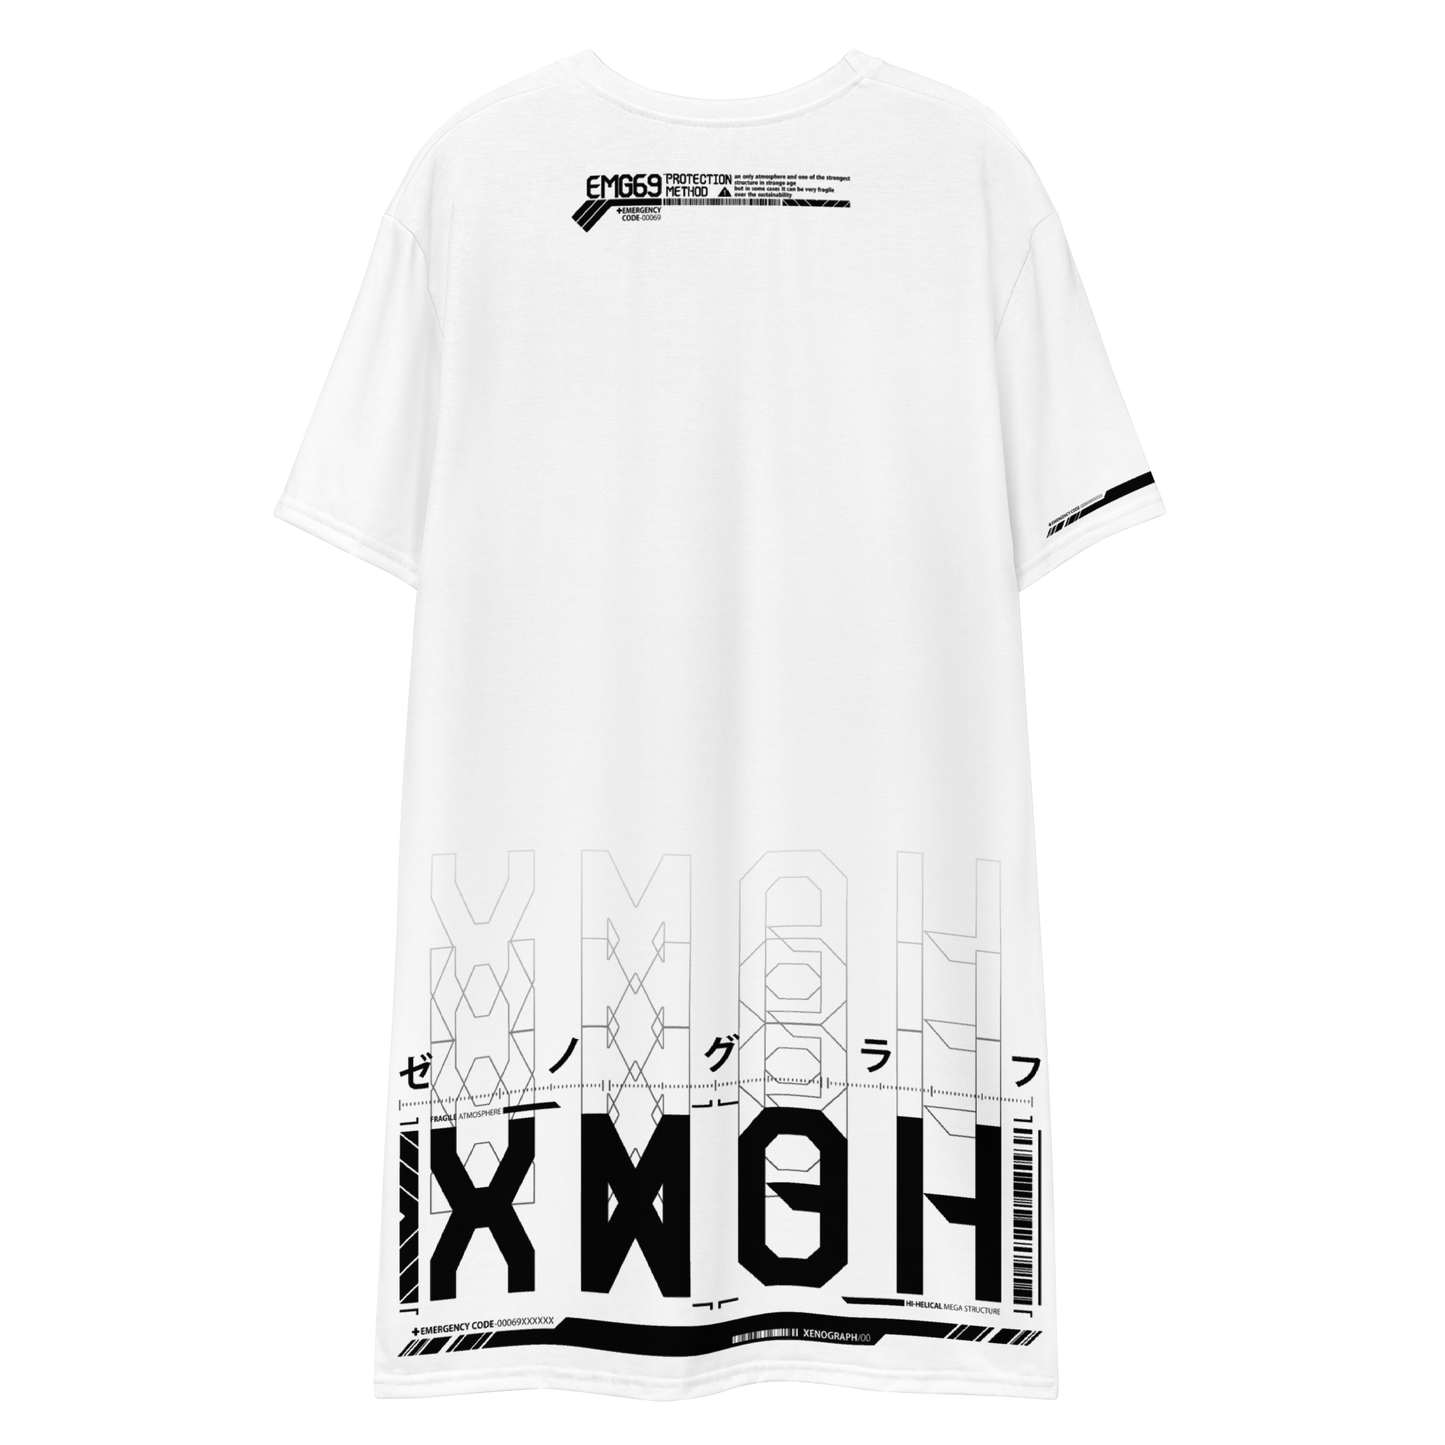 XENOGRAPH ver.2.0 [ unisex / full print over size long T-shirt ] white